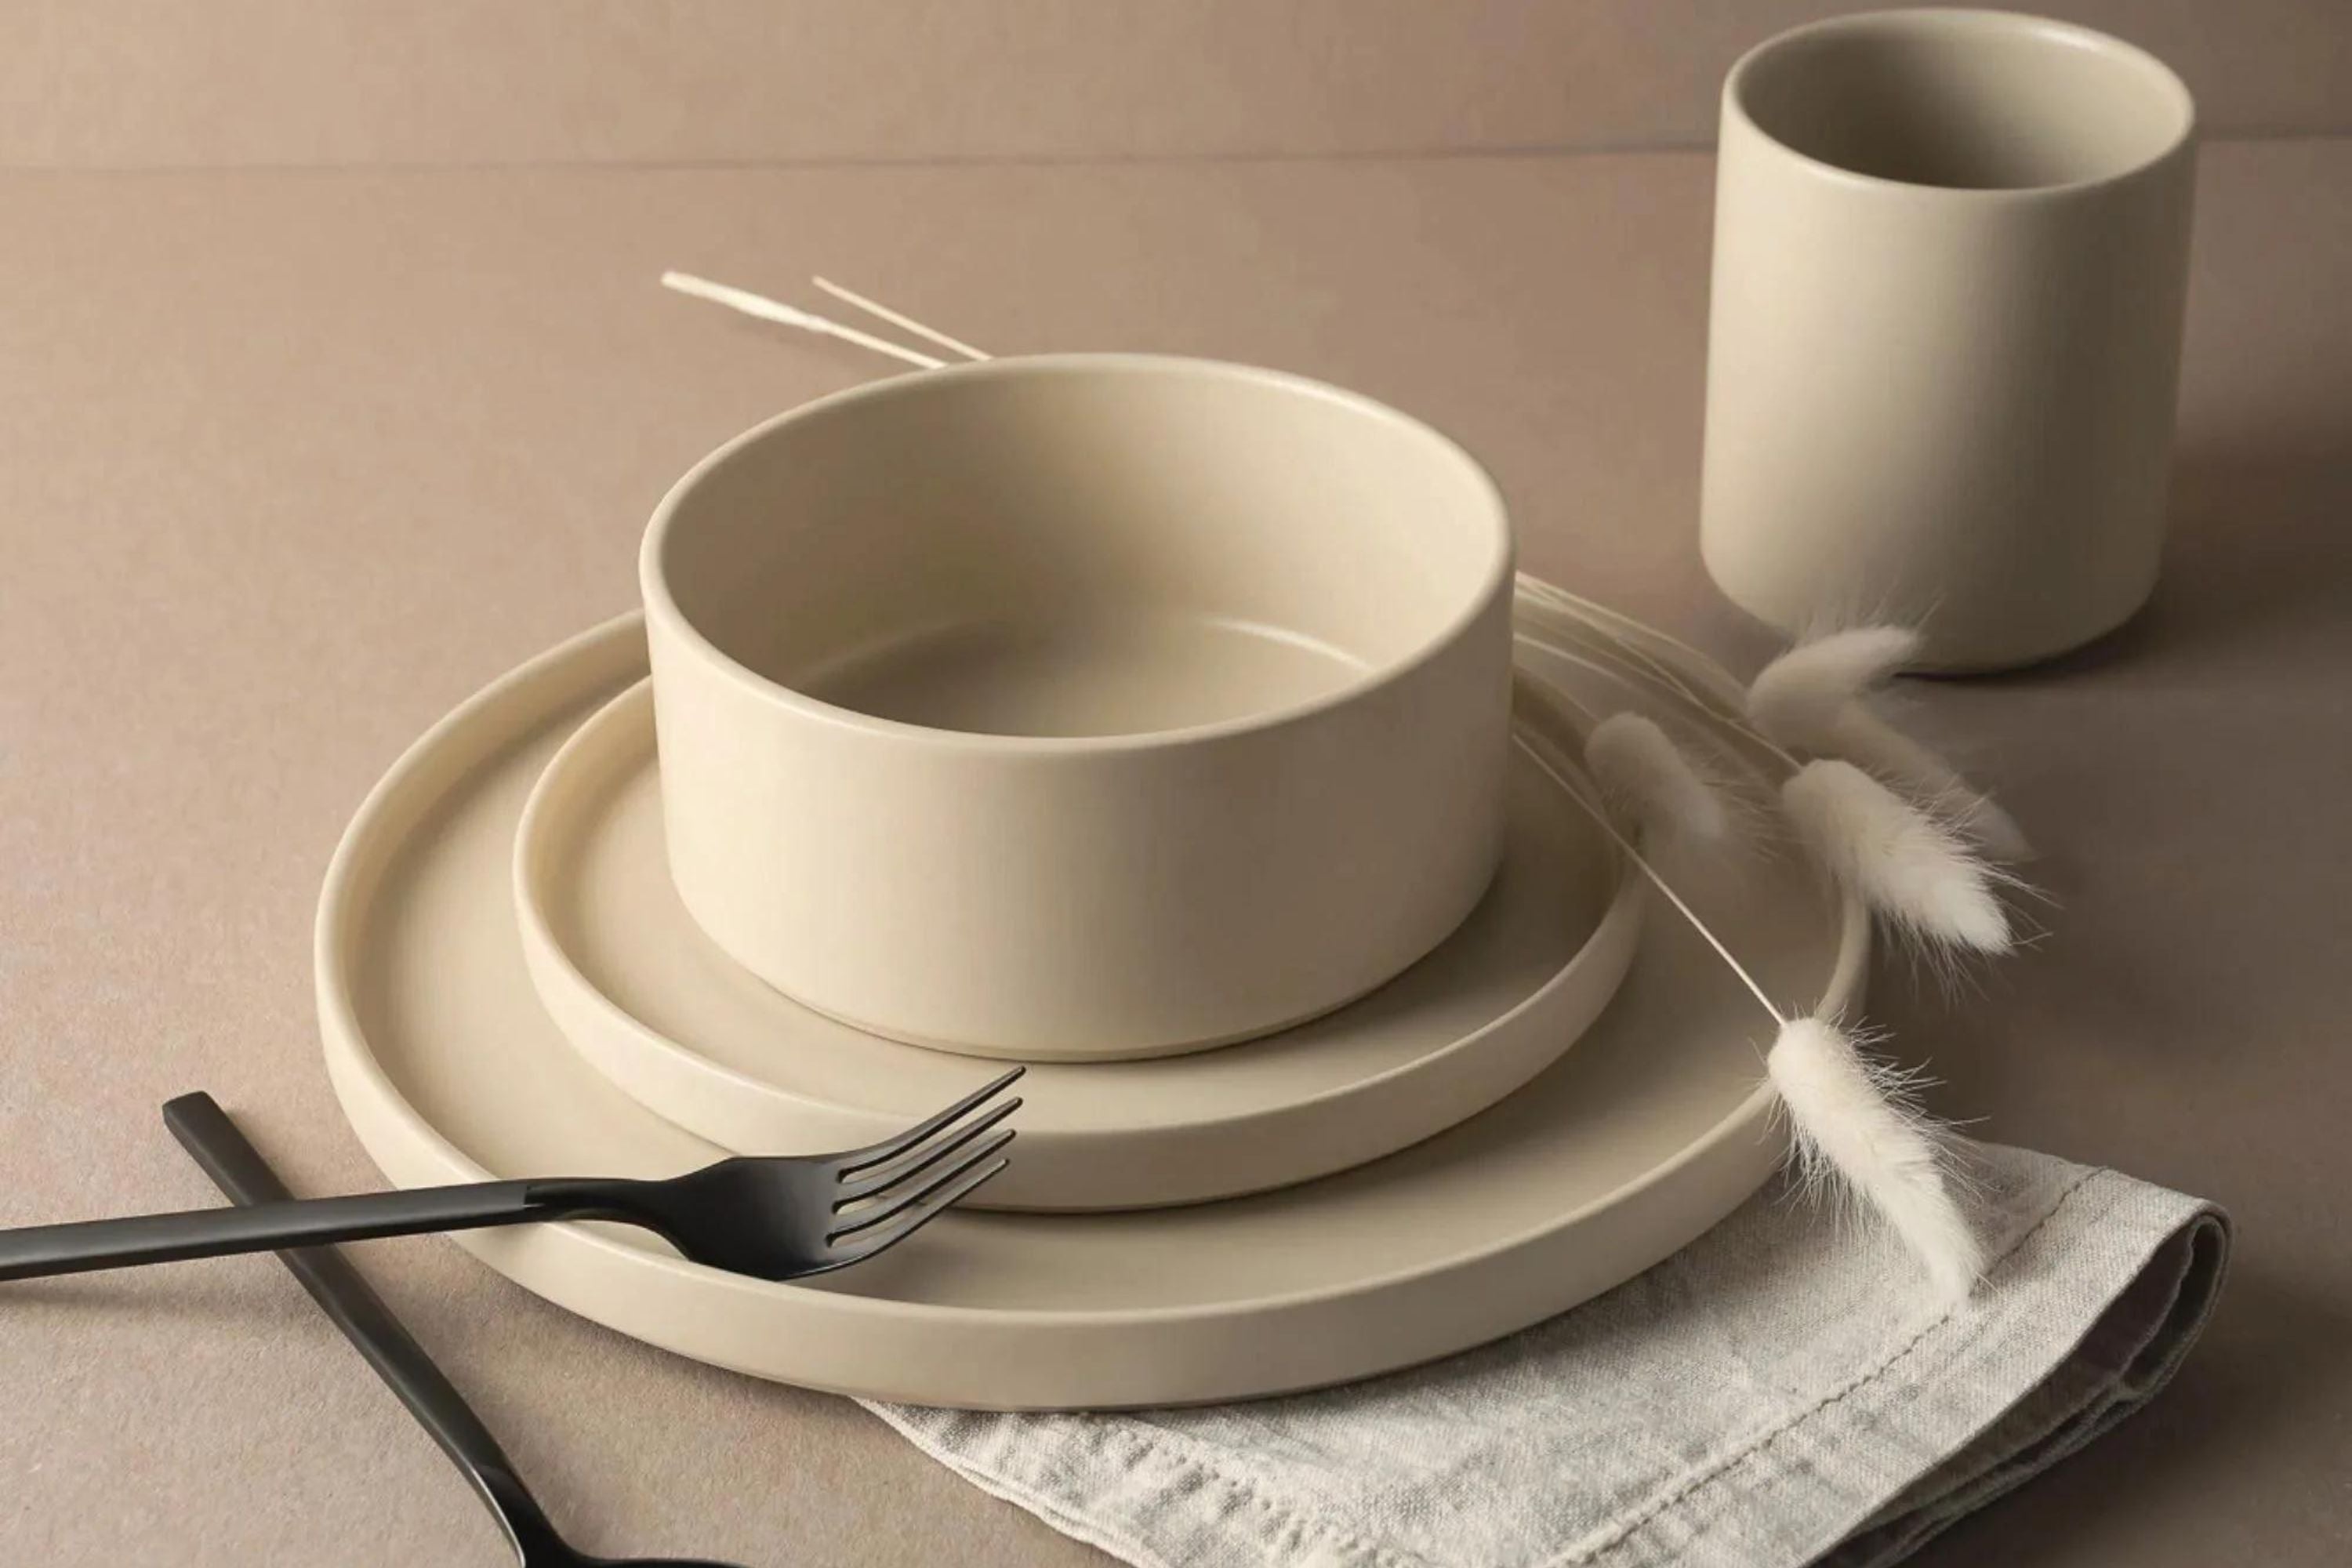 casaWare Ceramic Coated NonStick 12 Cup Muffin Pan (Silver Granite)